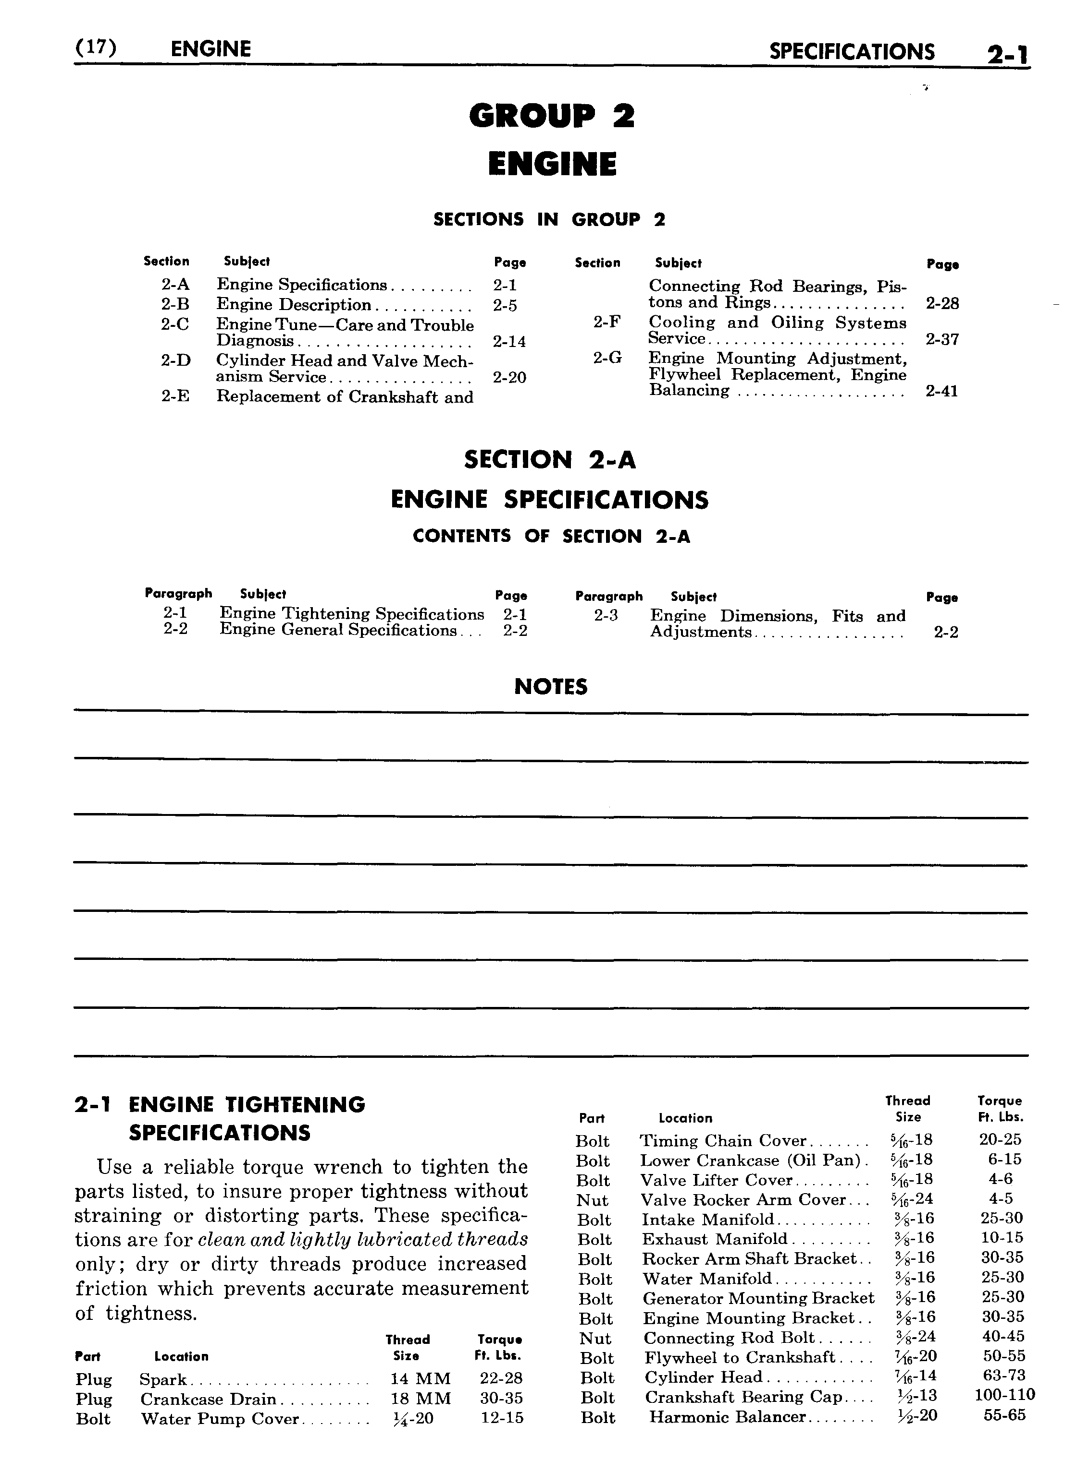 n_03 1956 Buick Shop Manual - Engine-001-001.jpg